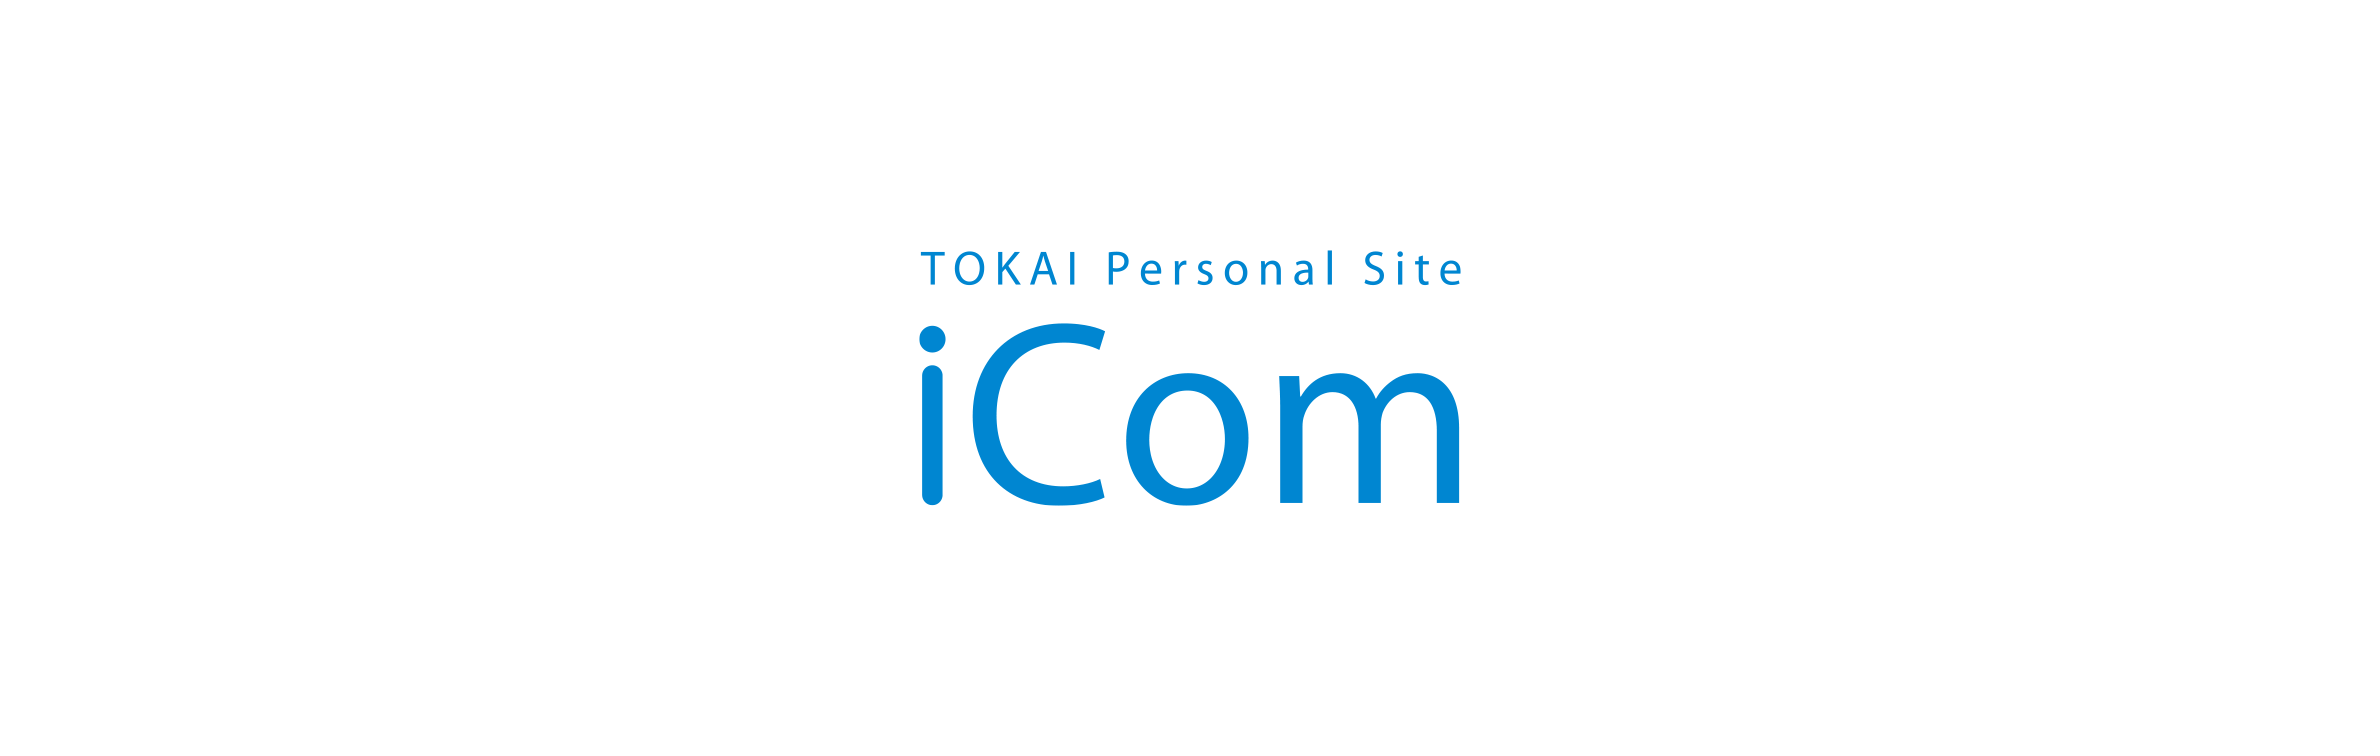 iCom - TOKAI Personal Site